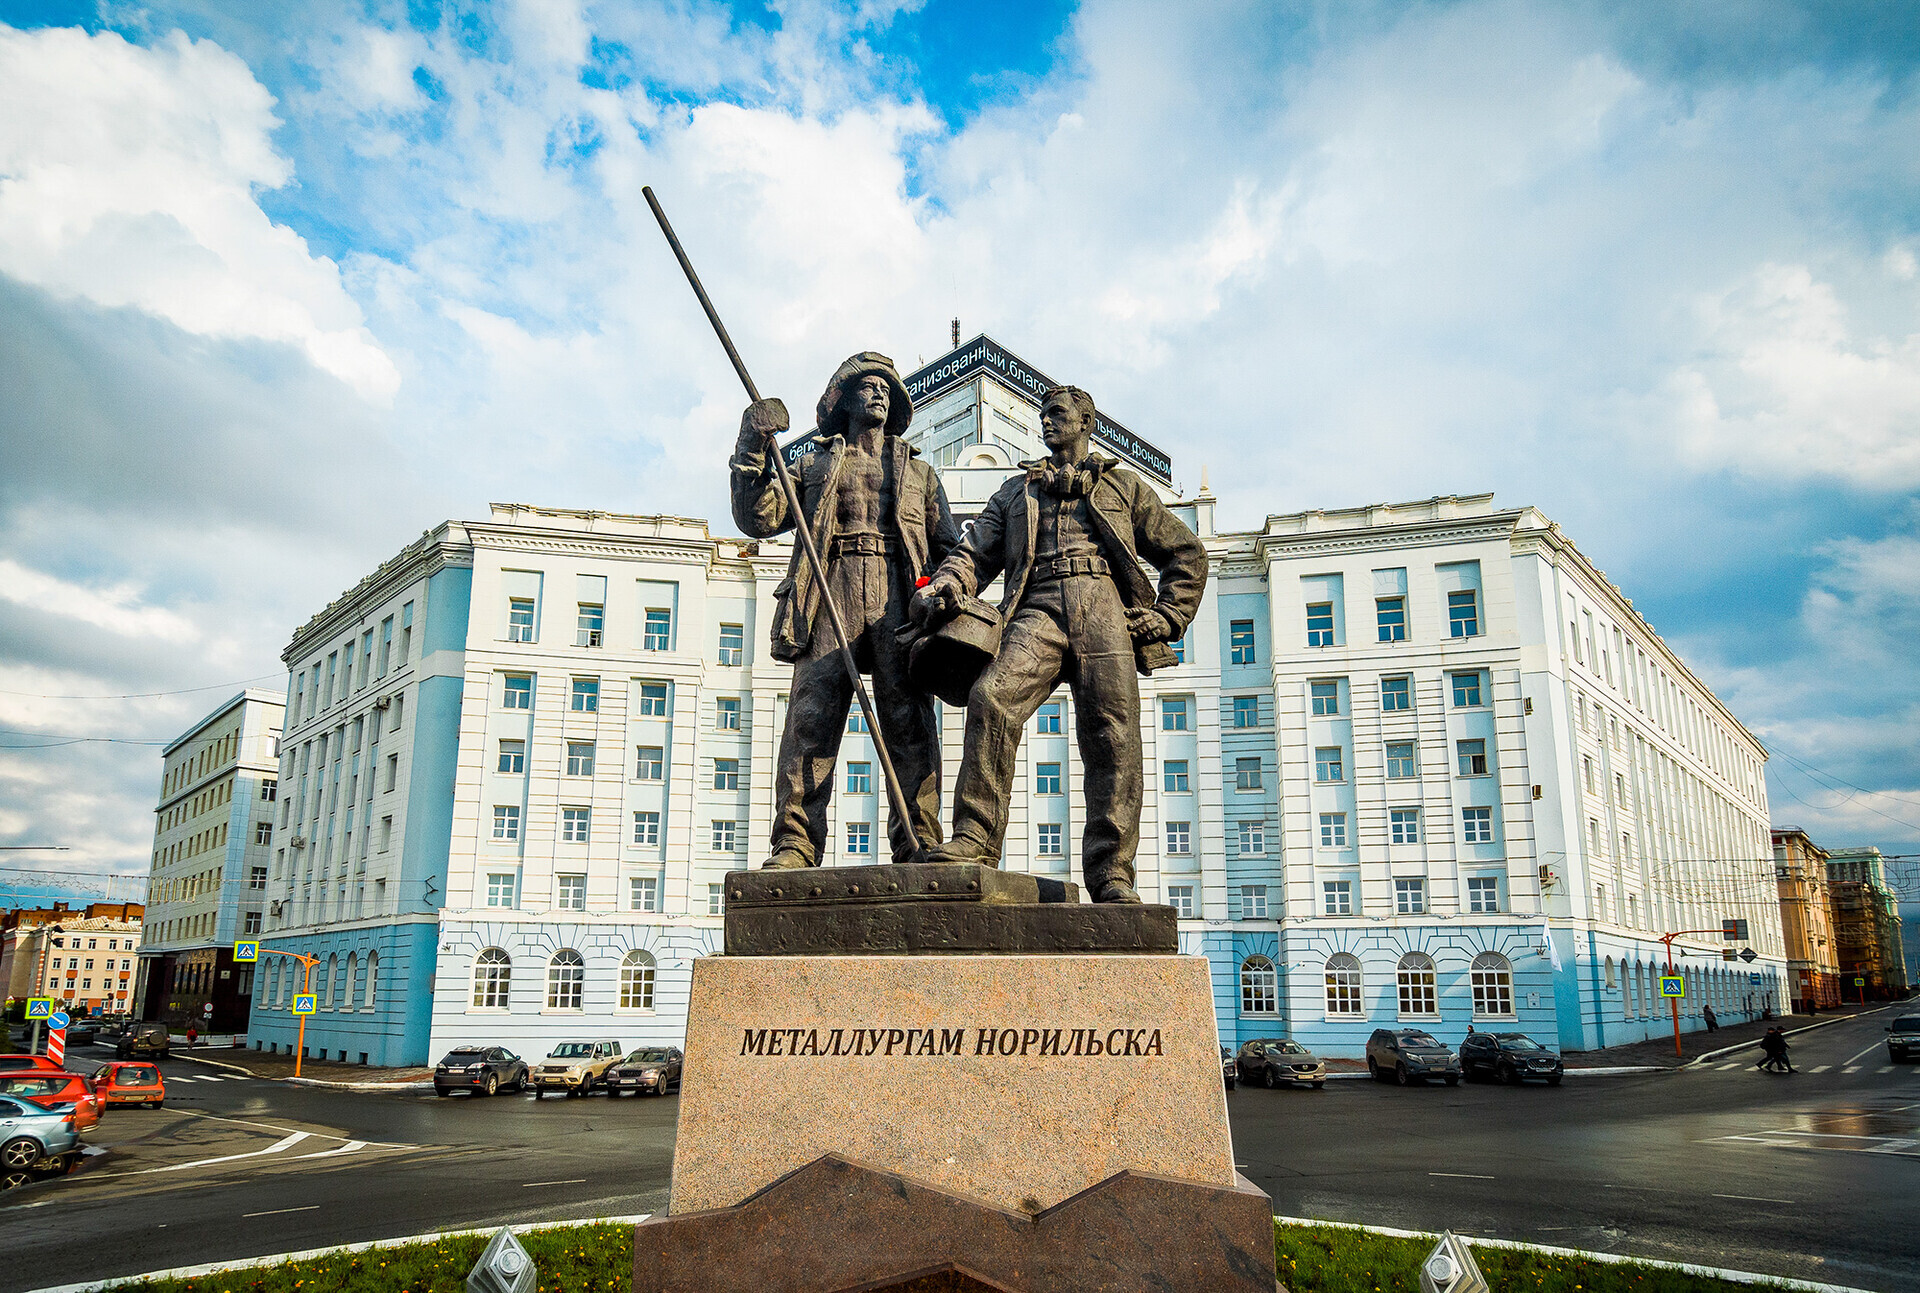 Monumento aos metalúrgicos, no centro de Norilsk.